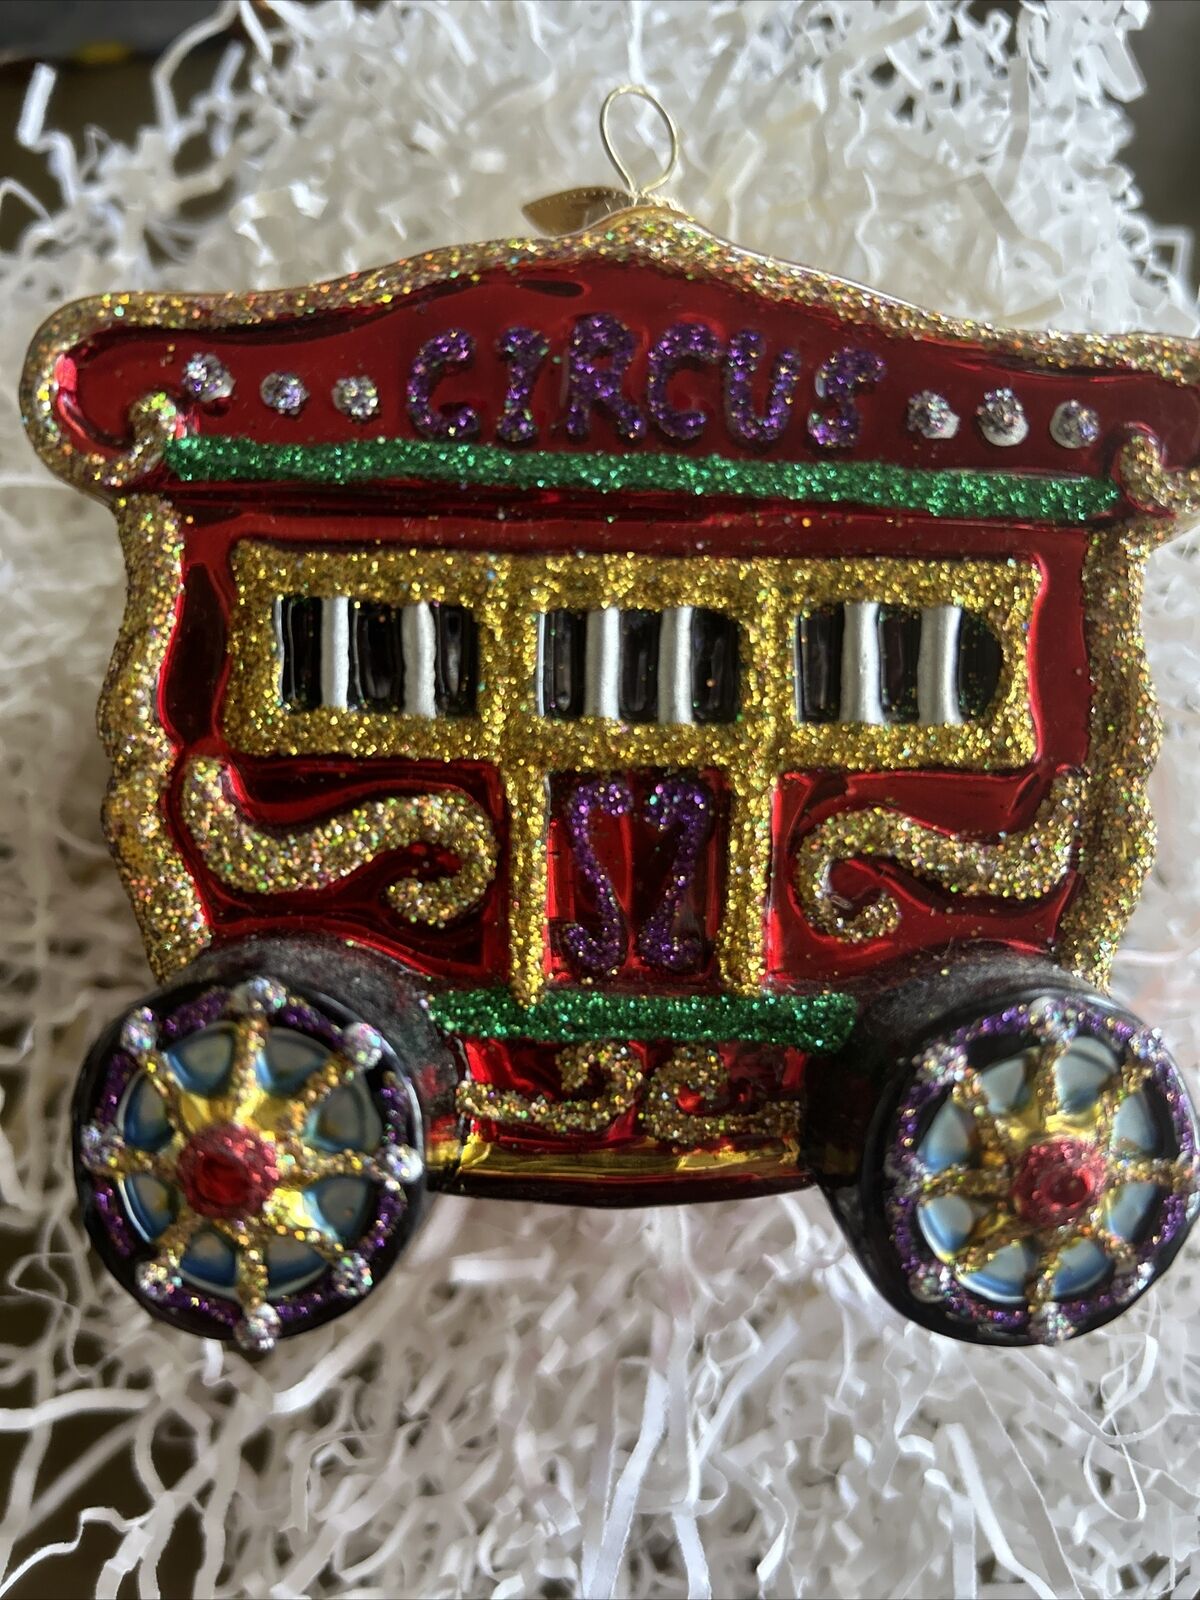 Merck Family’s Old World Christmas Circus Car 3.6”x4” Glitzy